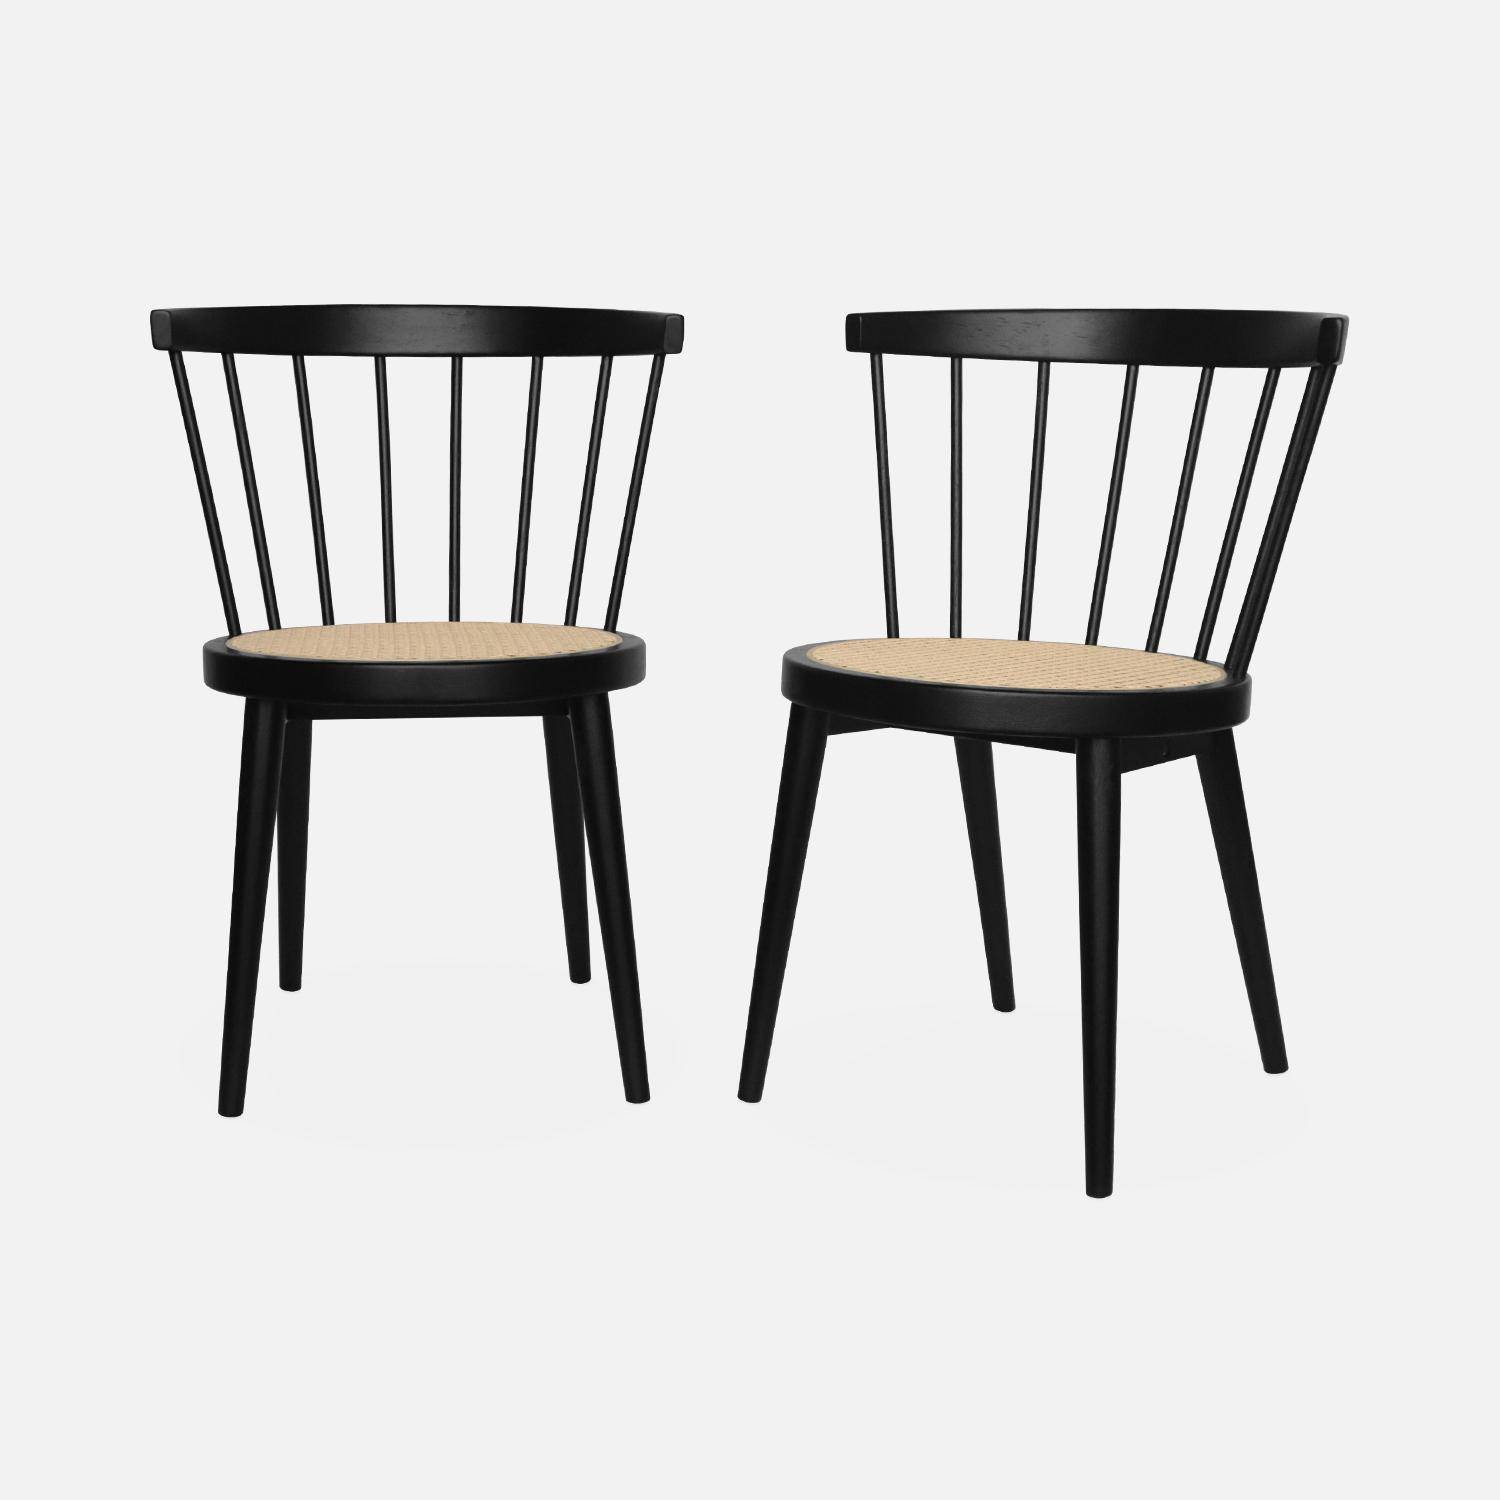 Lote de 2 sillas de madera negra y caña, Nora, A 54 x P 54 x Alt 76,5cm,sweeek,Photo4